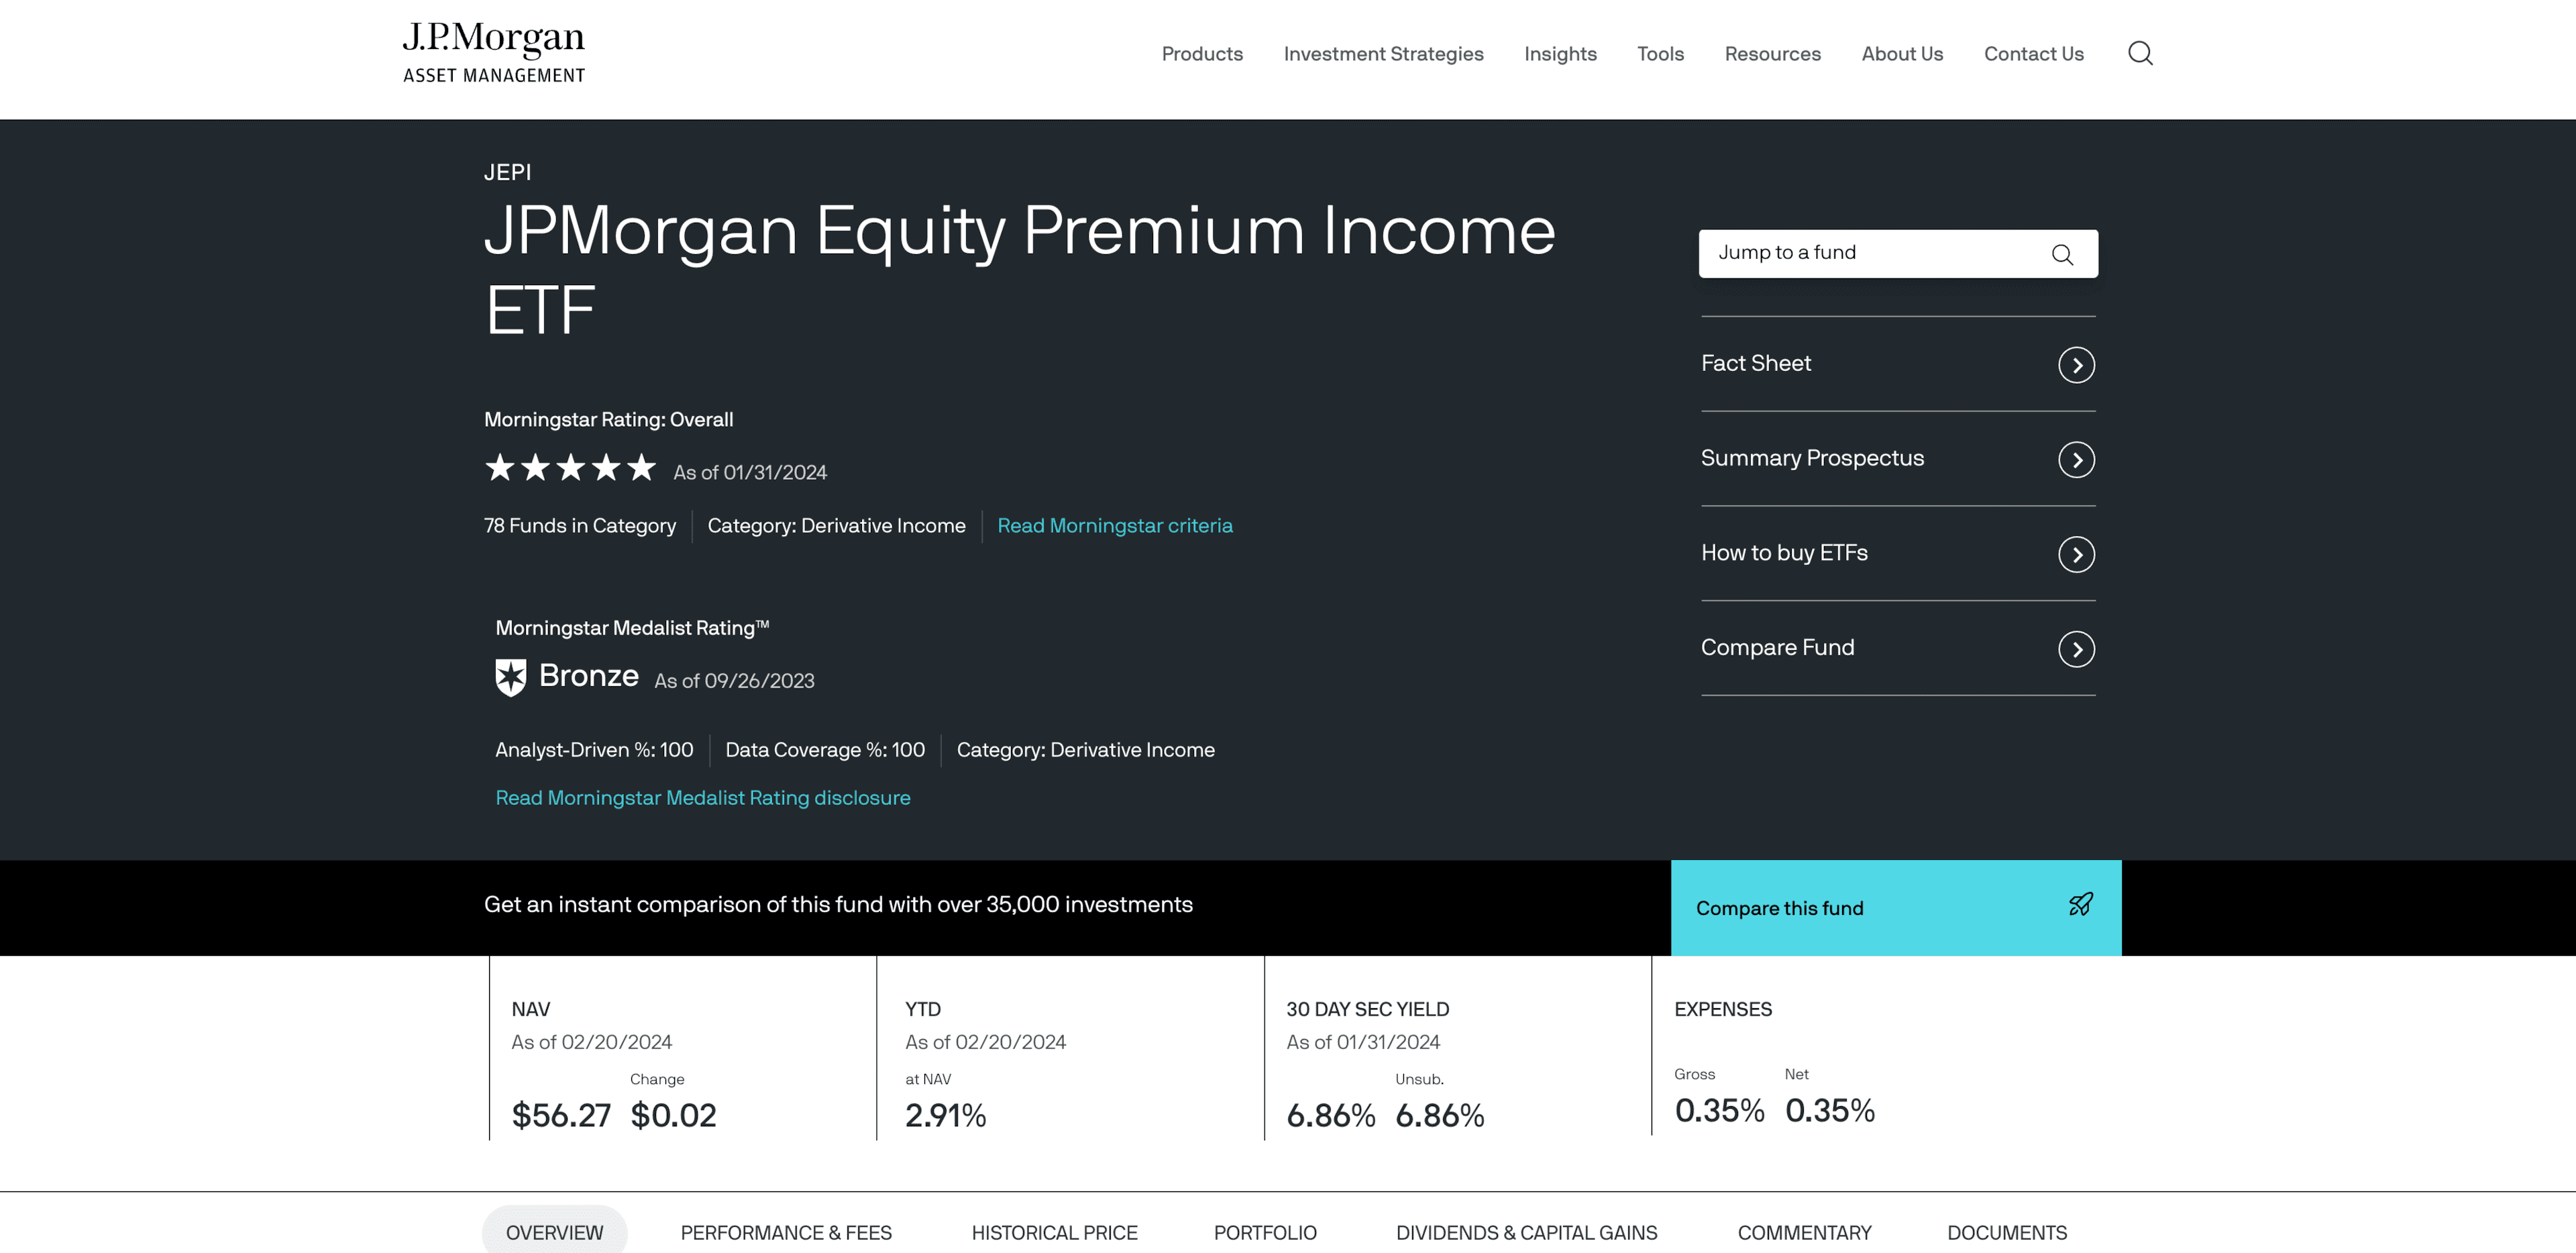 JEPI JPMorgan Equity Premium Income